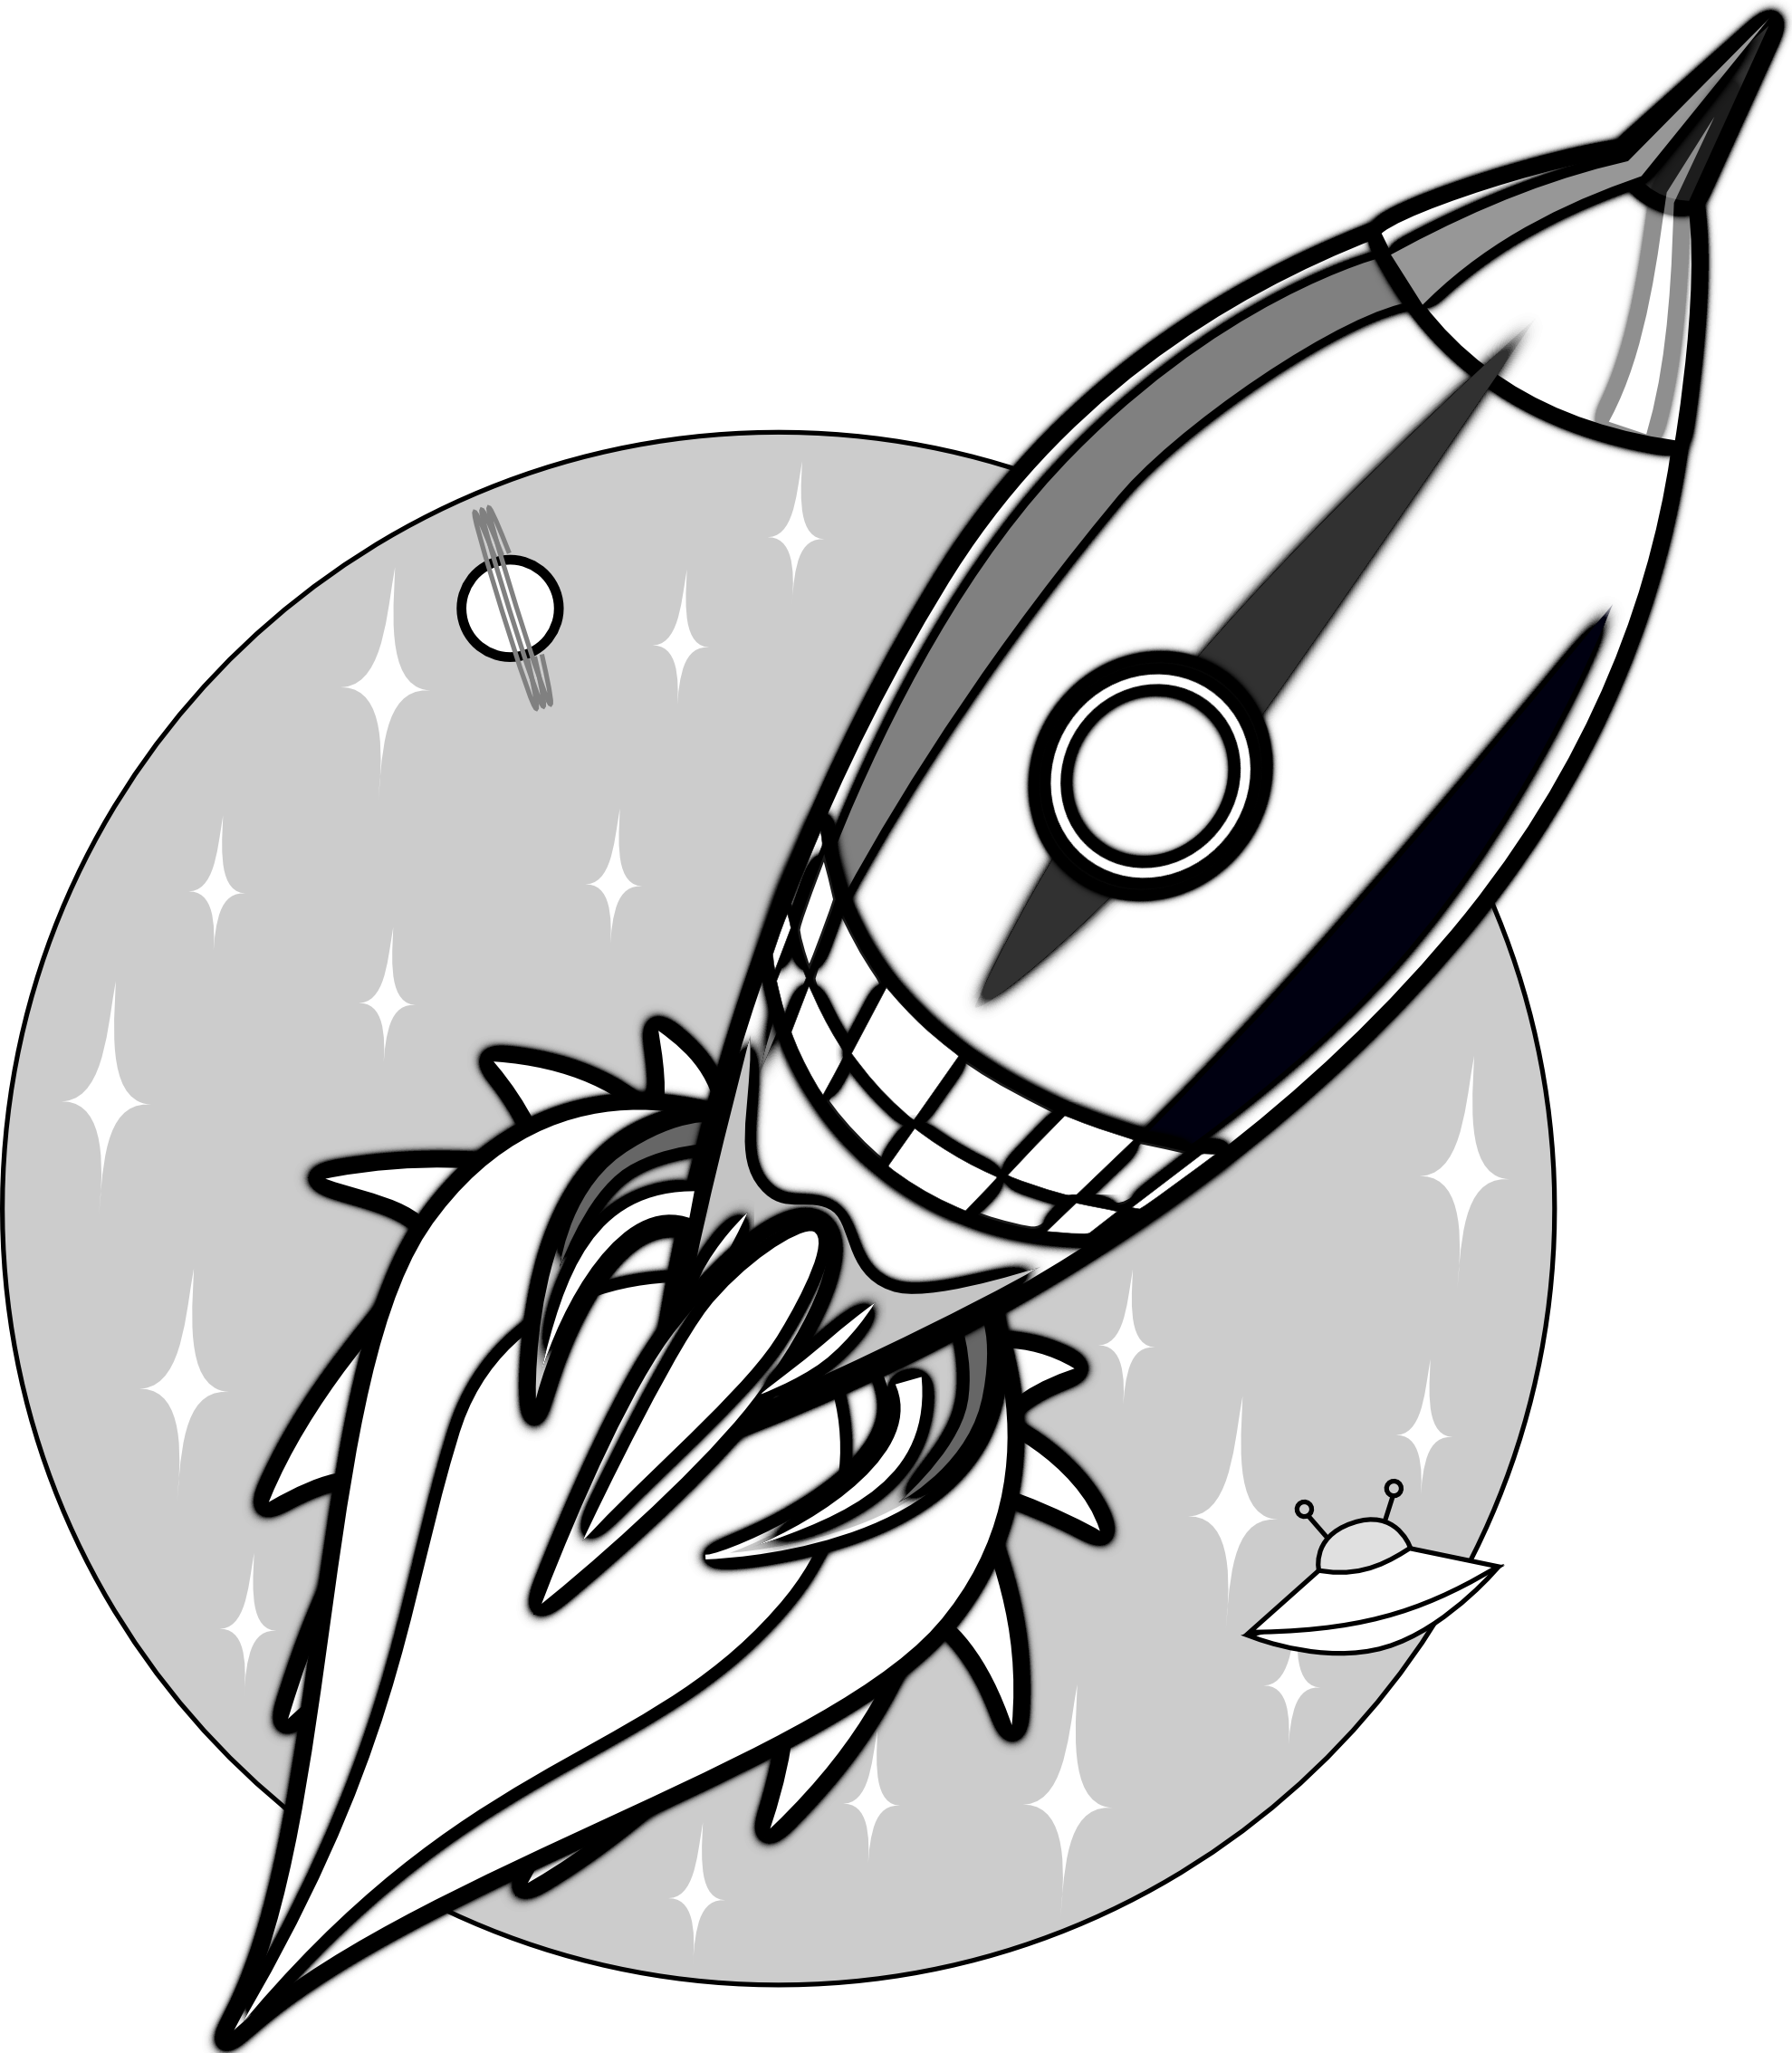 rocket-outline-clip-art-20-free-cliparts-download-images-on